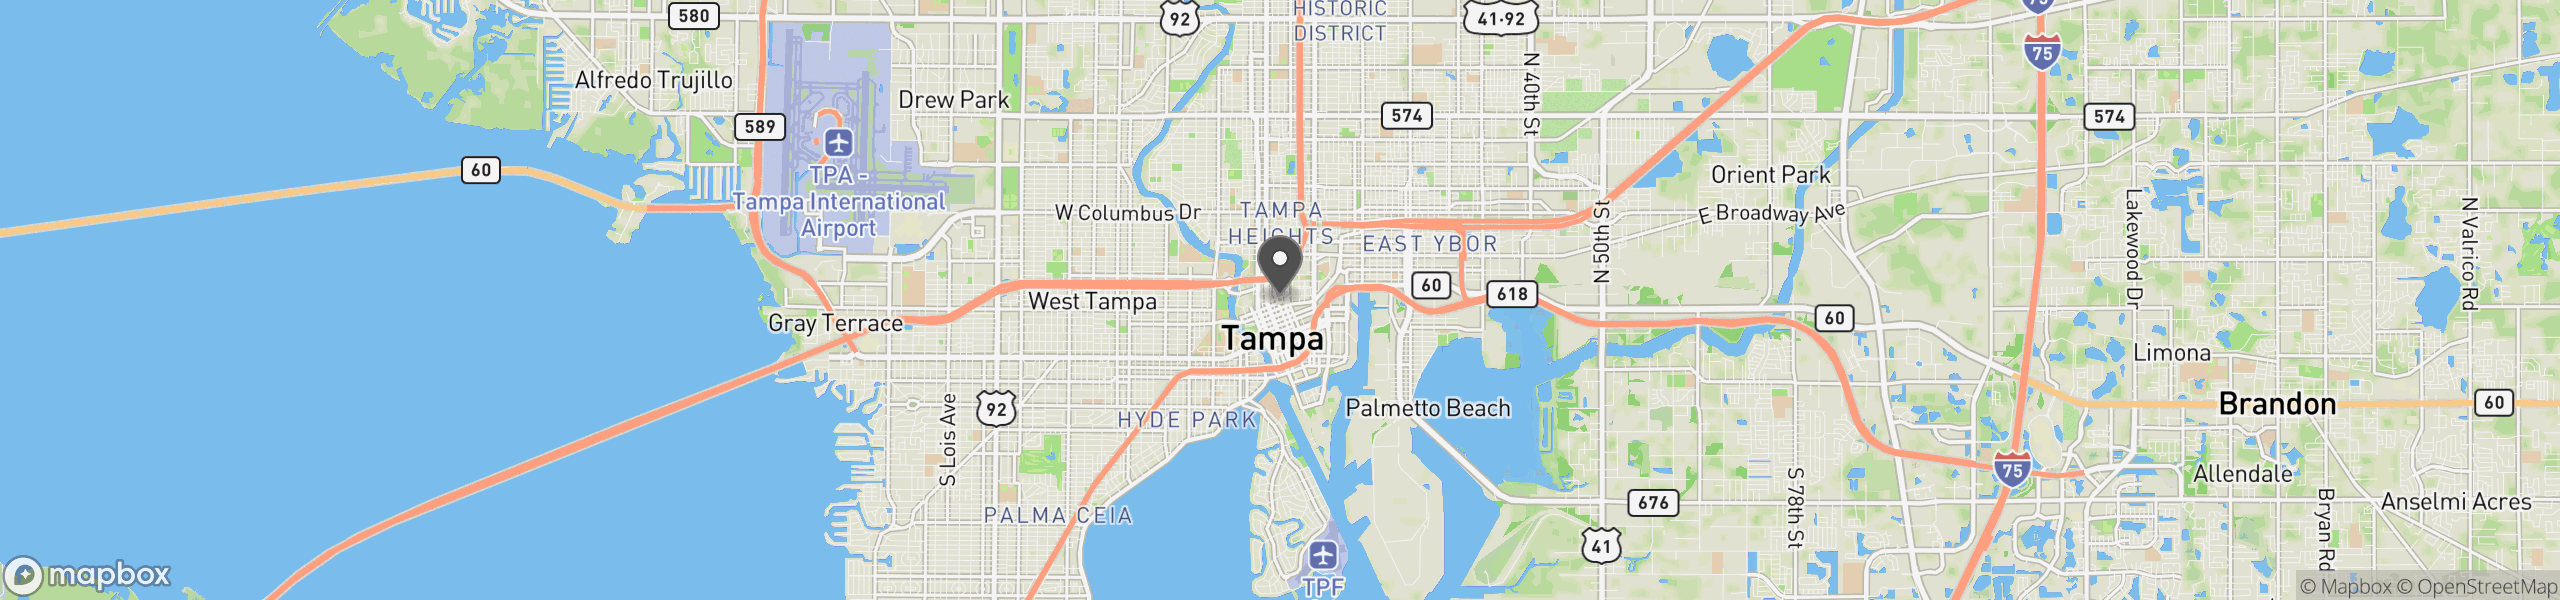 Tampa, FL 33602